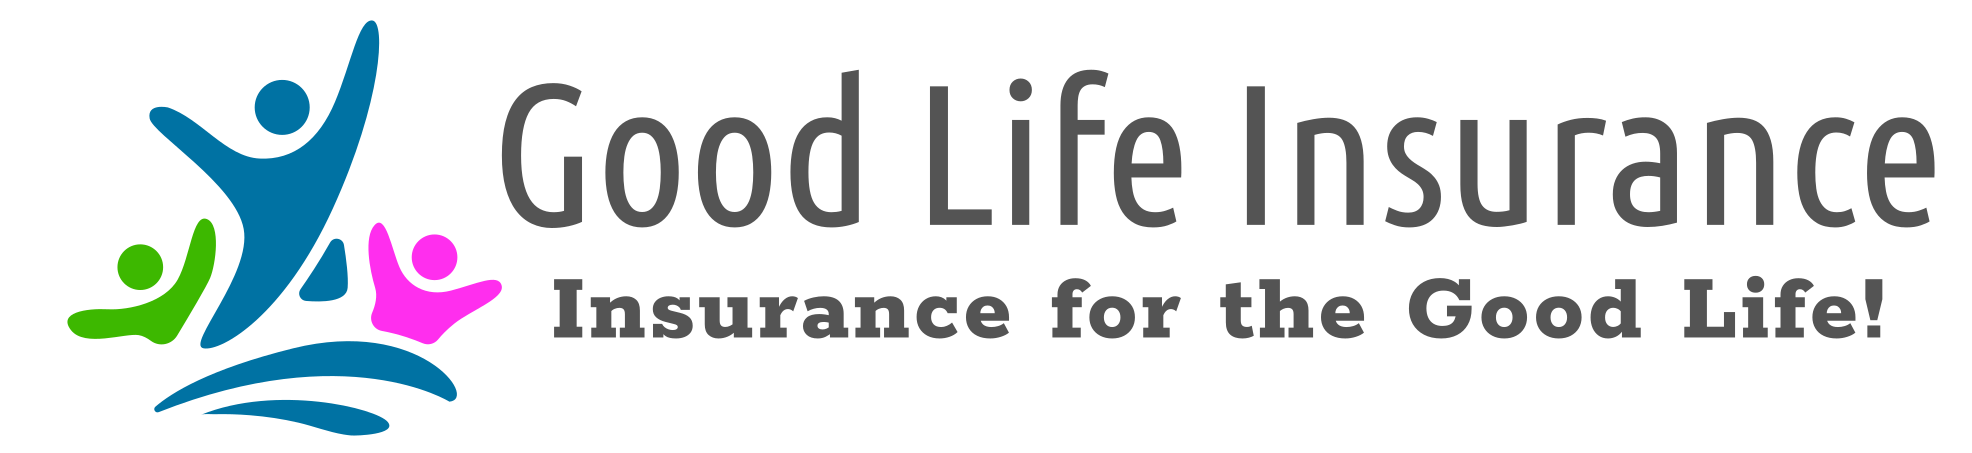 Good Life Insurance